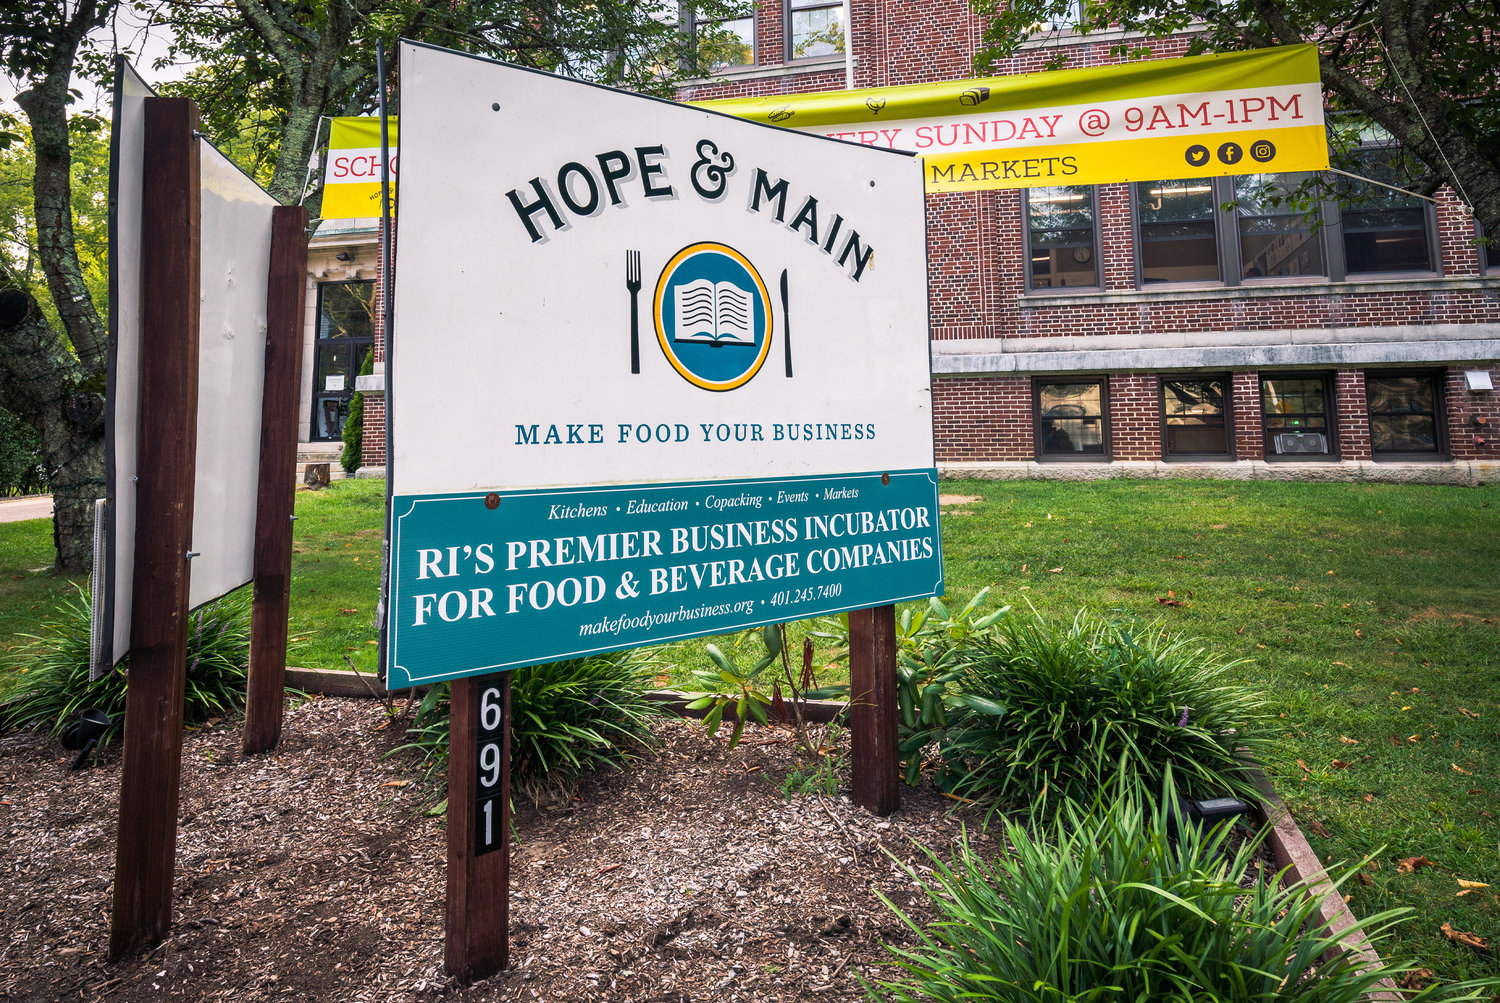 18,000-square-foot schoolhouse turned food incubator in Warren